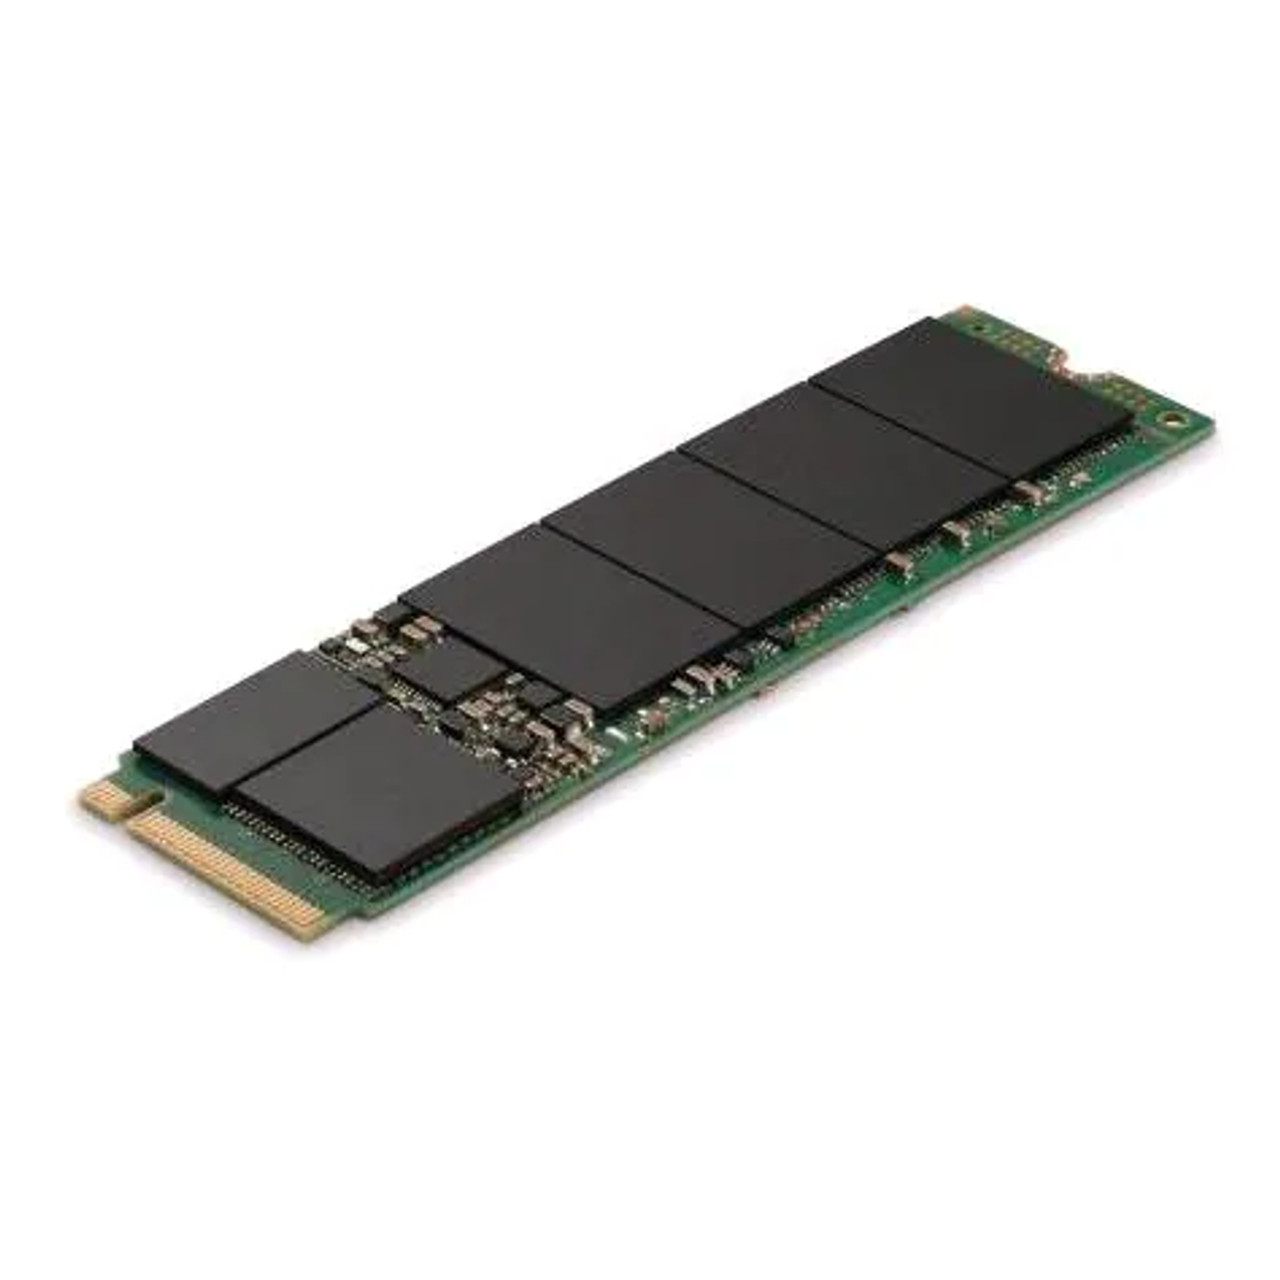 SAMSUNG NVMe PCIe M.2 SSD PM981 512GB